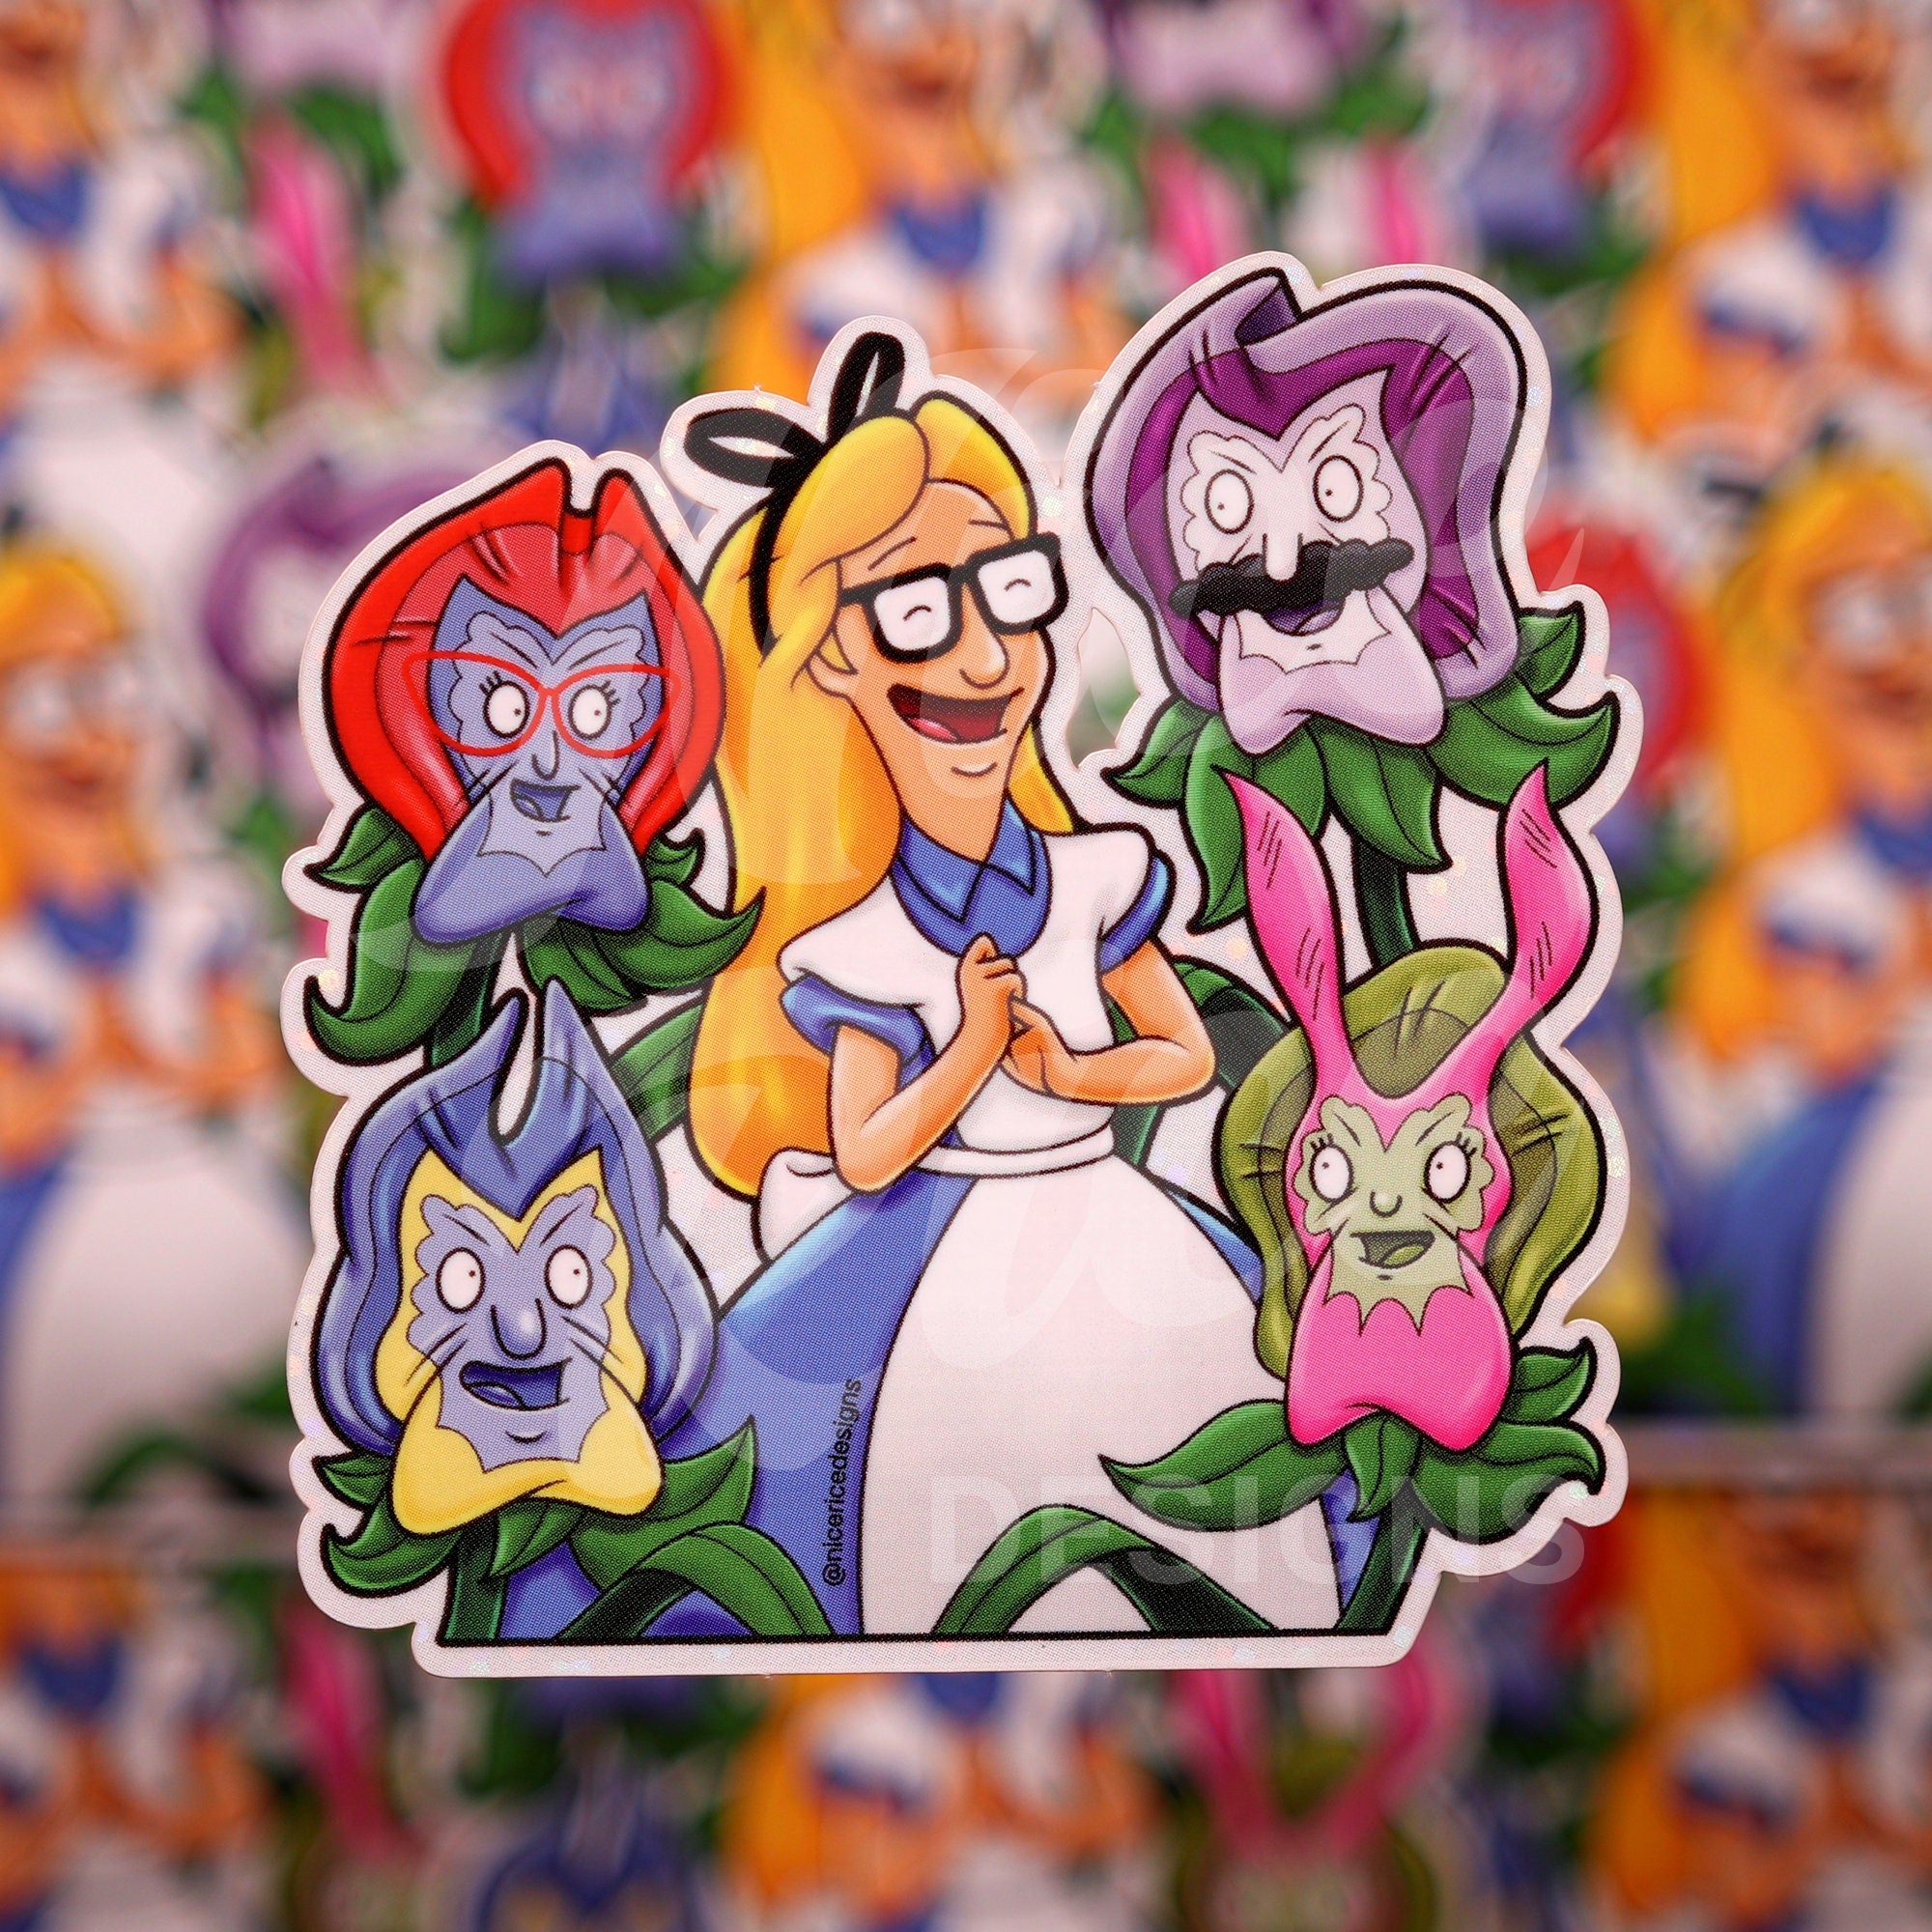 Erotic Friend Fiction in Wonderland Sticker by Nice Rice Designs